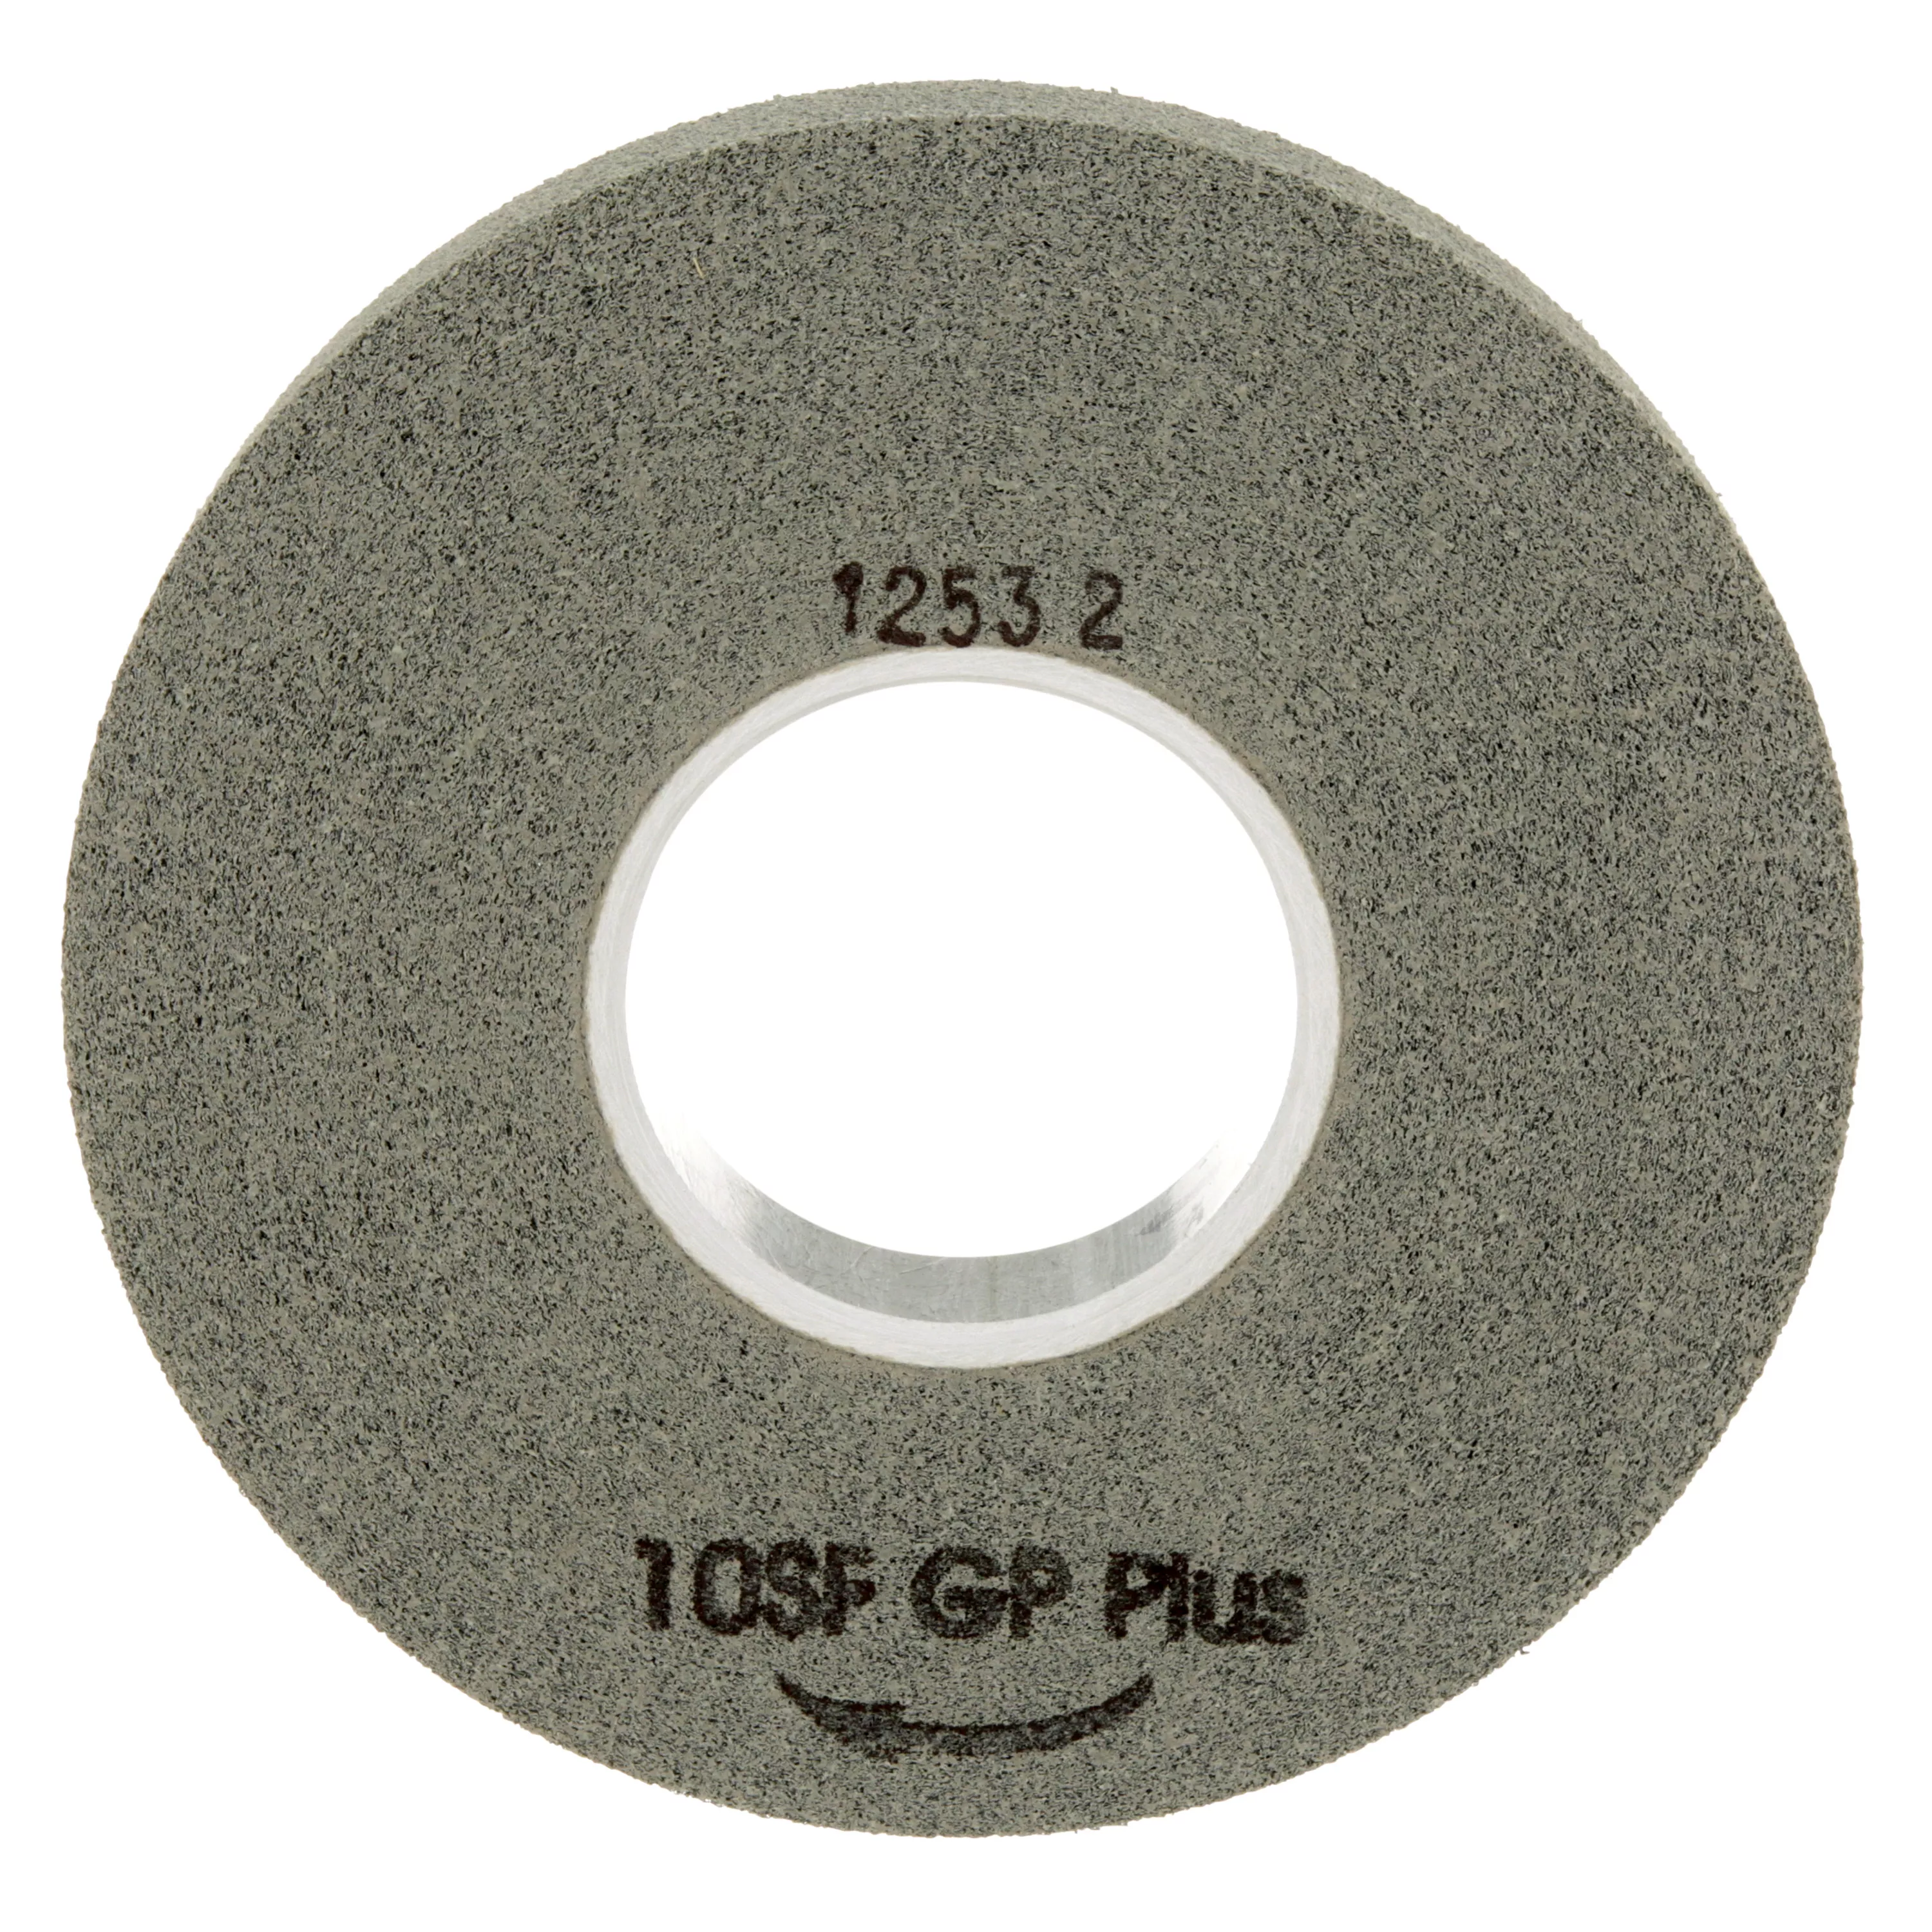 SKU 7000046904 | Standard Abrasives™ GP Plus Wheel 855353